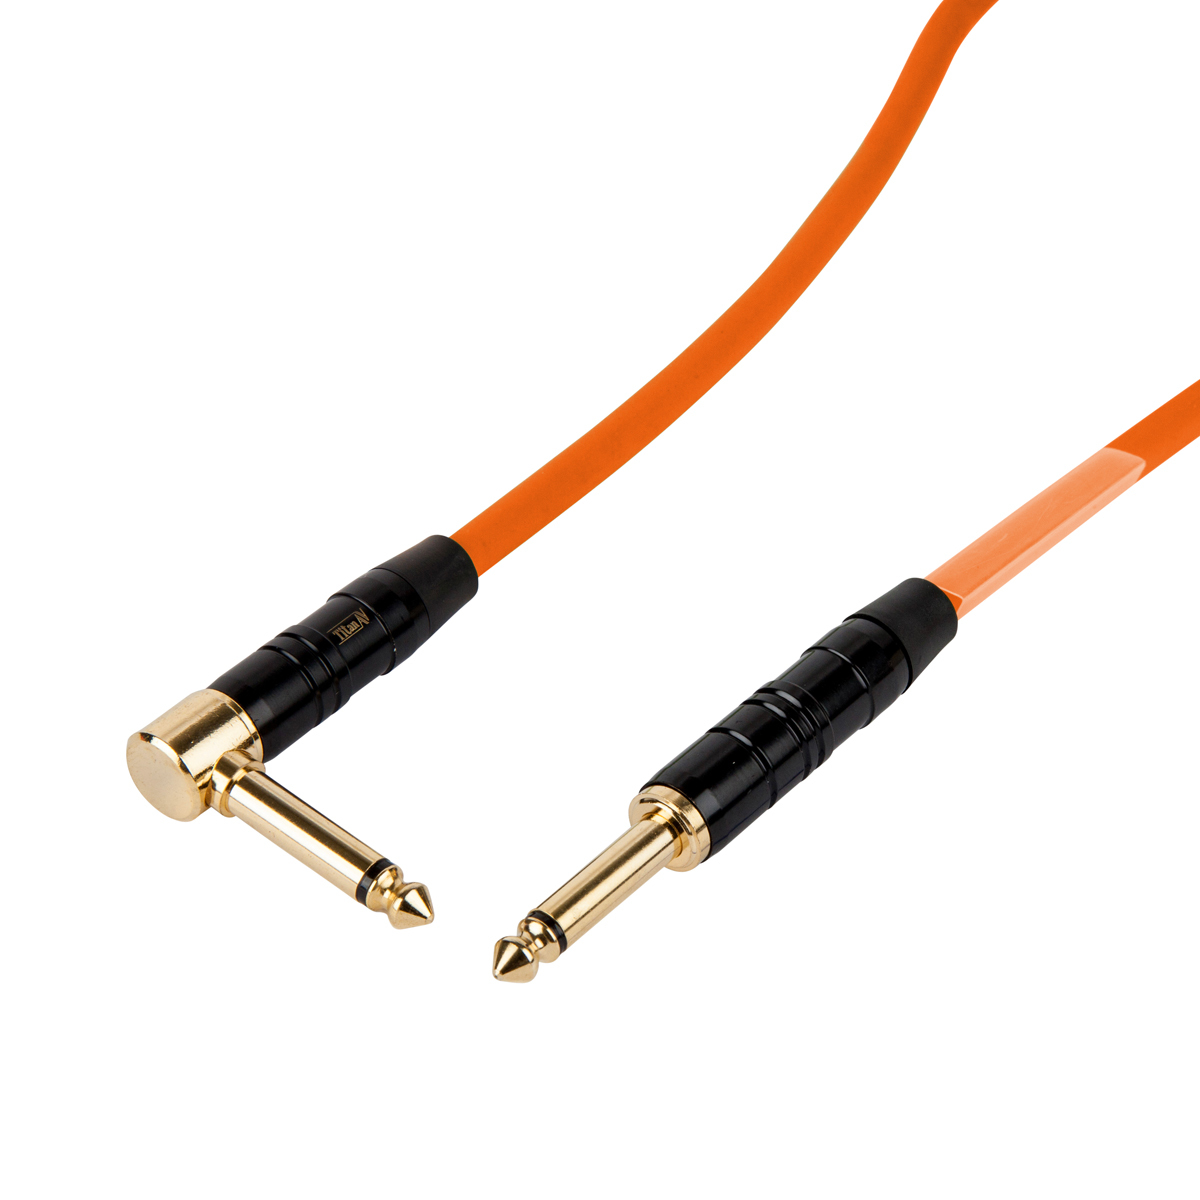 0.5m Patch Cable, 1/4" Jack - 1/4" Right Angle Jack, 6.5mm Orange PVC Jacket